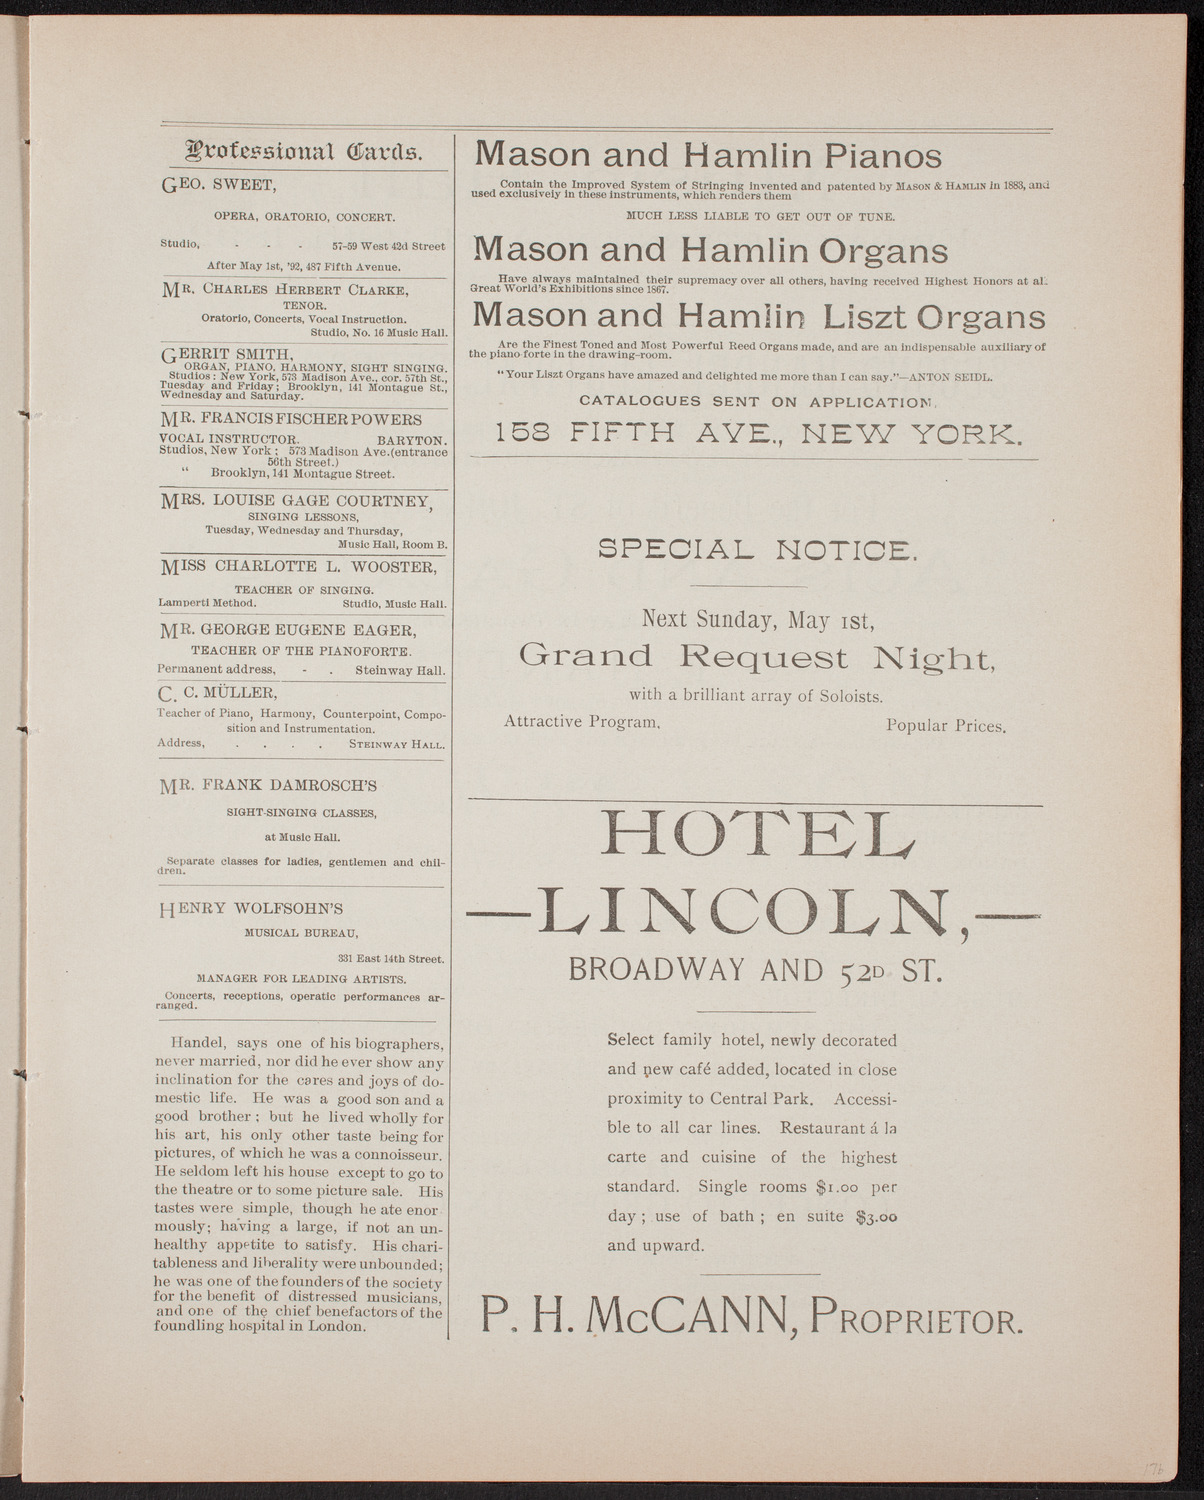 New York Symphony Orchestra: Handel Festival, April 29, 1892, program page 5